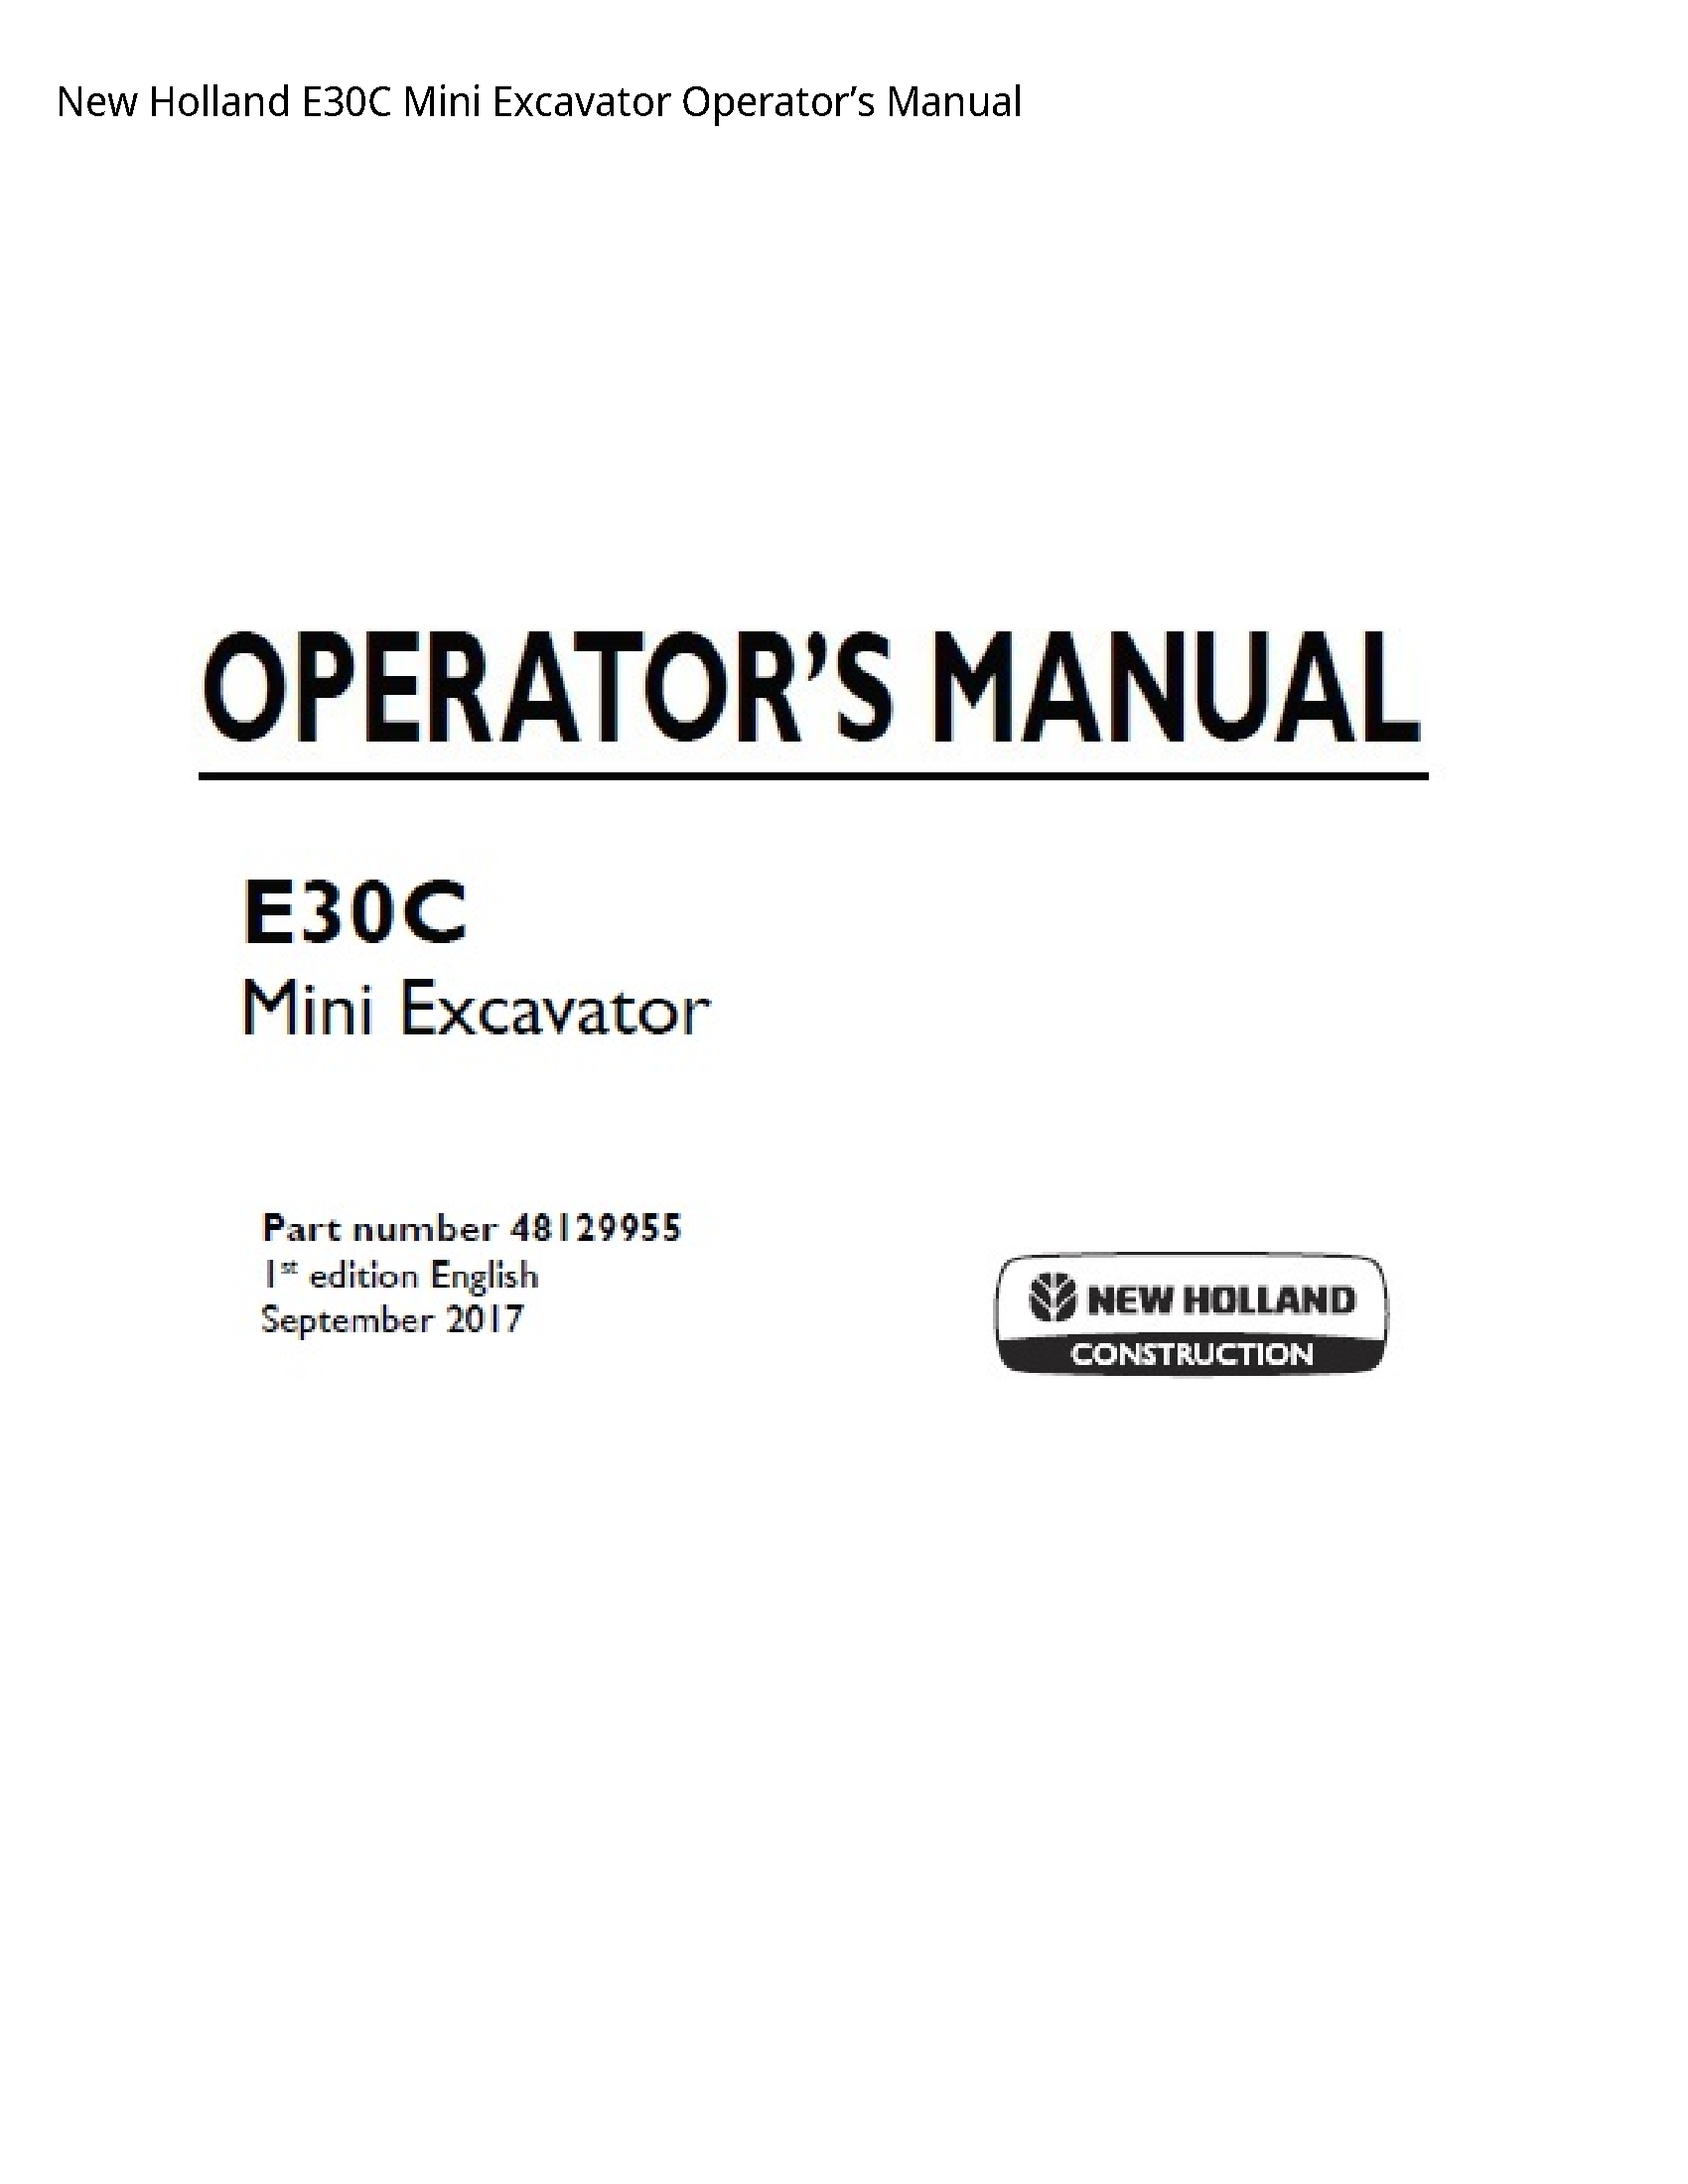 New Holland E30C Mini Excavator Operator’s manual